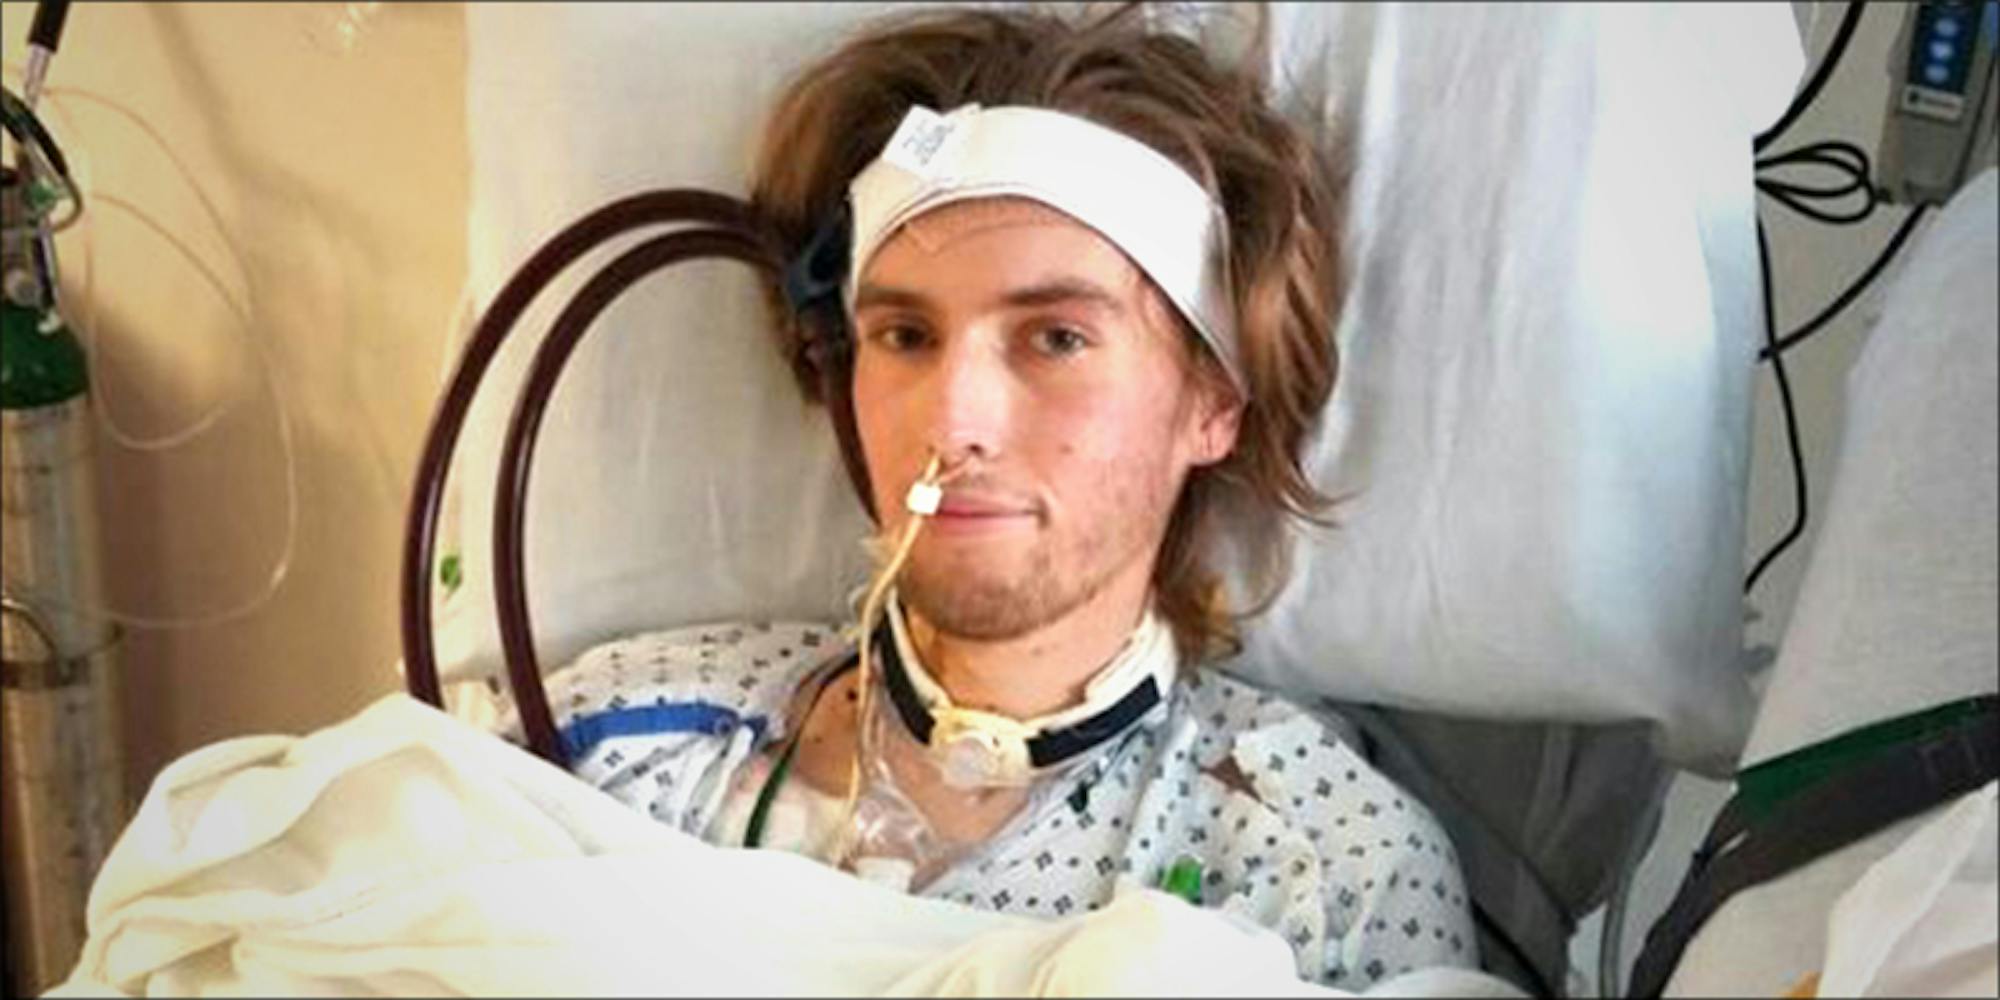 Teen Denied LifeSaving Transplant Due To Hospitals NoCannabis Policy